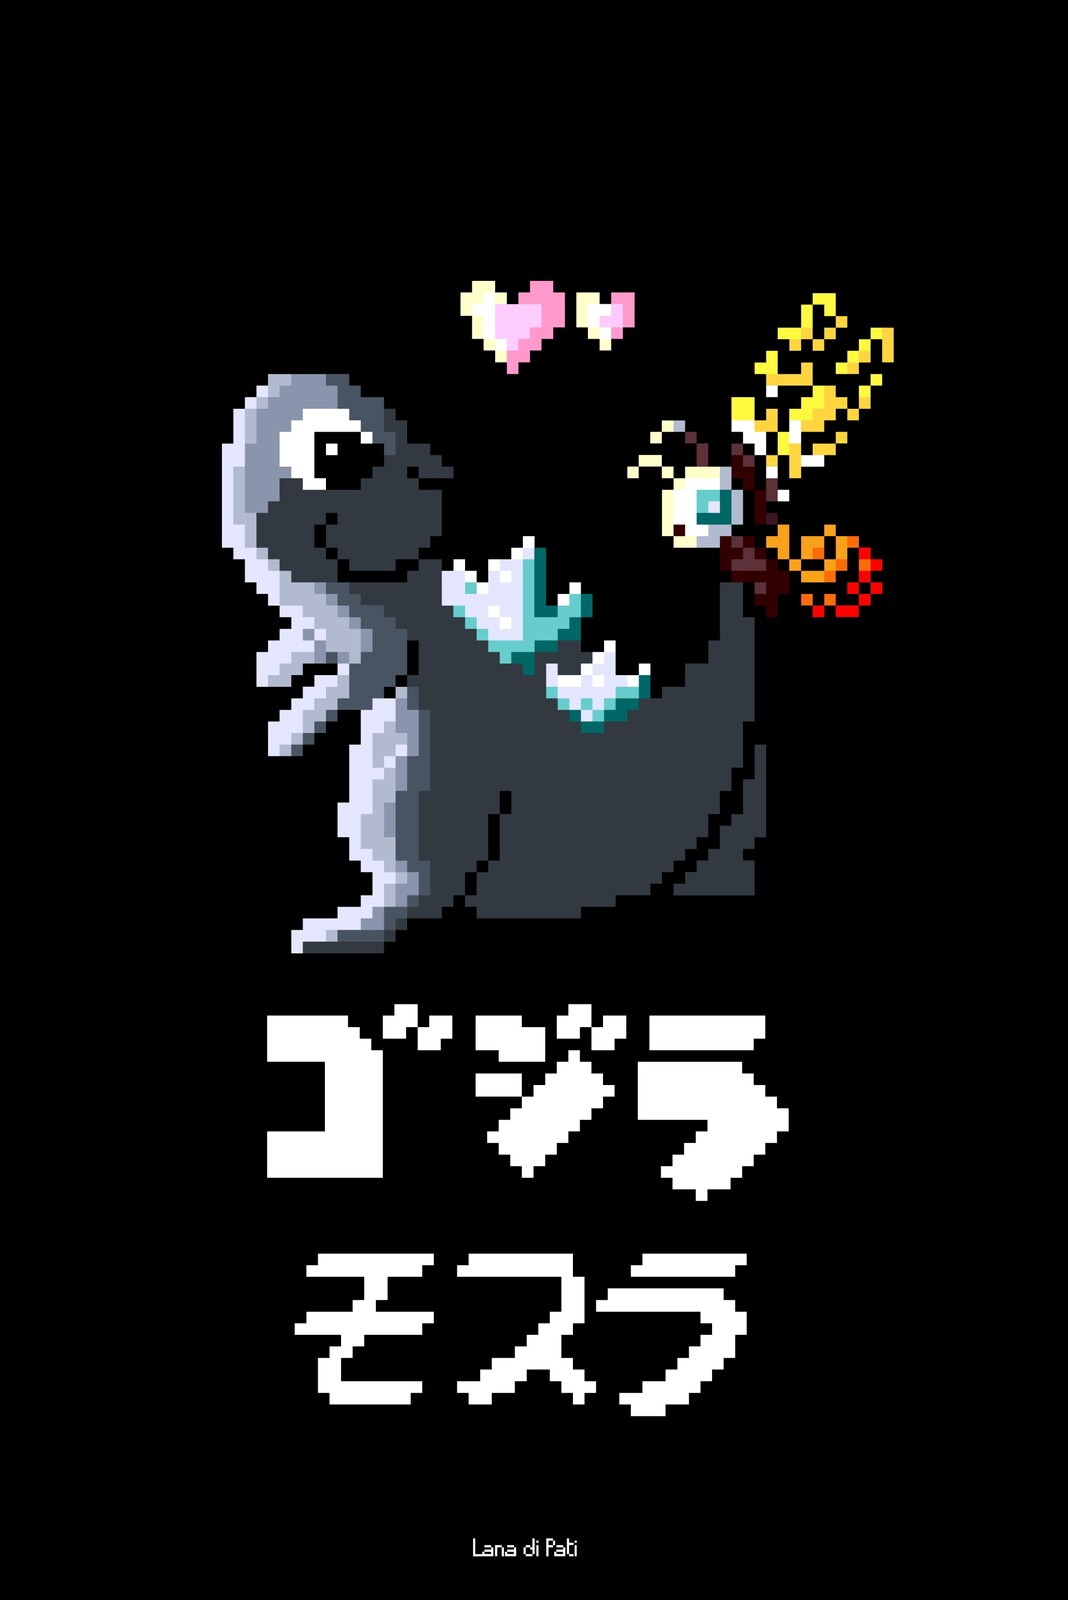 The pixel katakana caption reads:
Gojira
Mosura